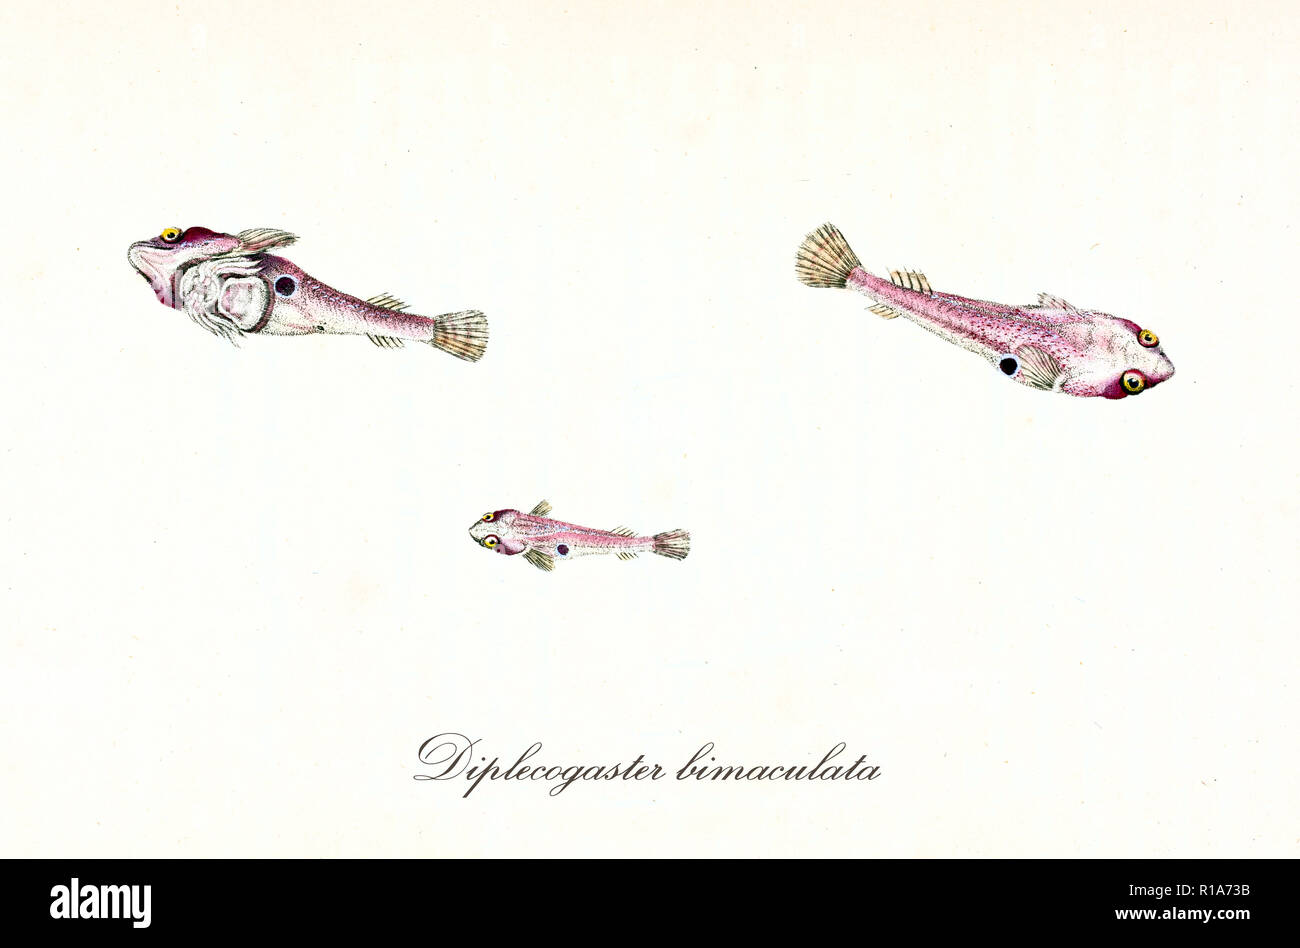 Antigua ilustración colorida de Two-Spotted Clingfish (Diplecogaster bimaculata), vista superior de tres pequeños ejemplares rosado, elementos aislados sobre fondo blanco. Por Edward Donovan. Londres 1802 Foto de stock